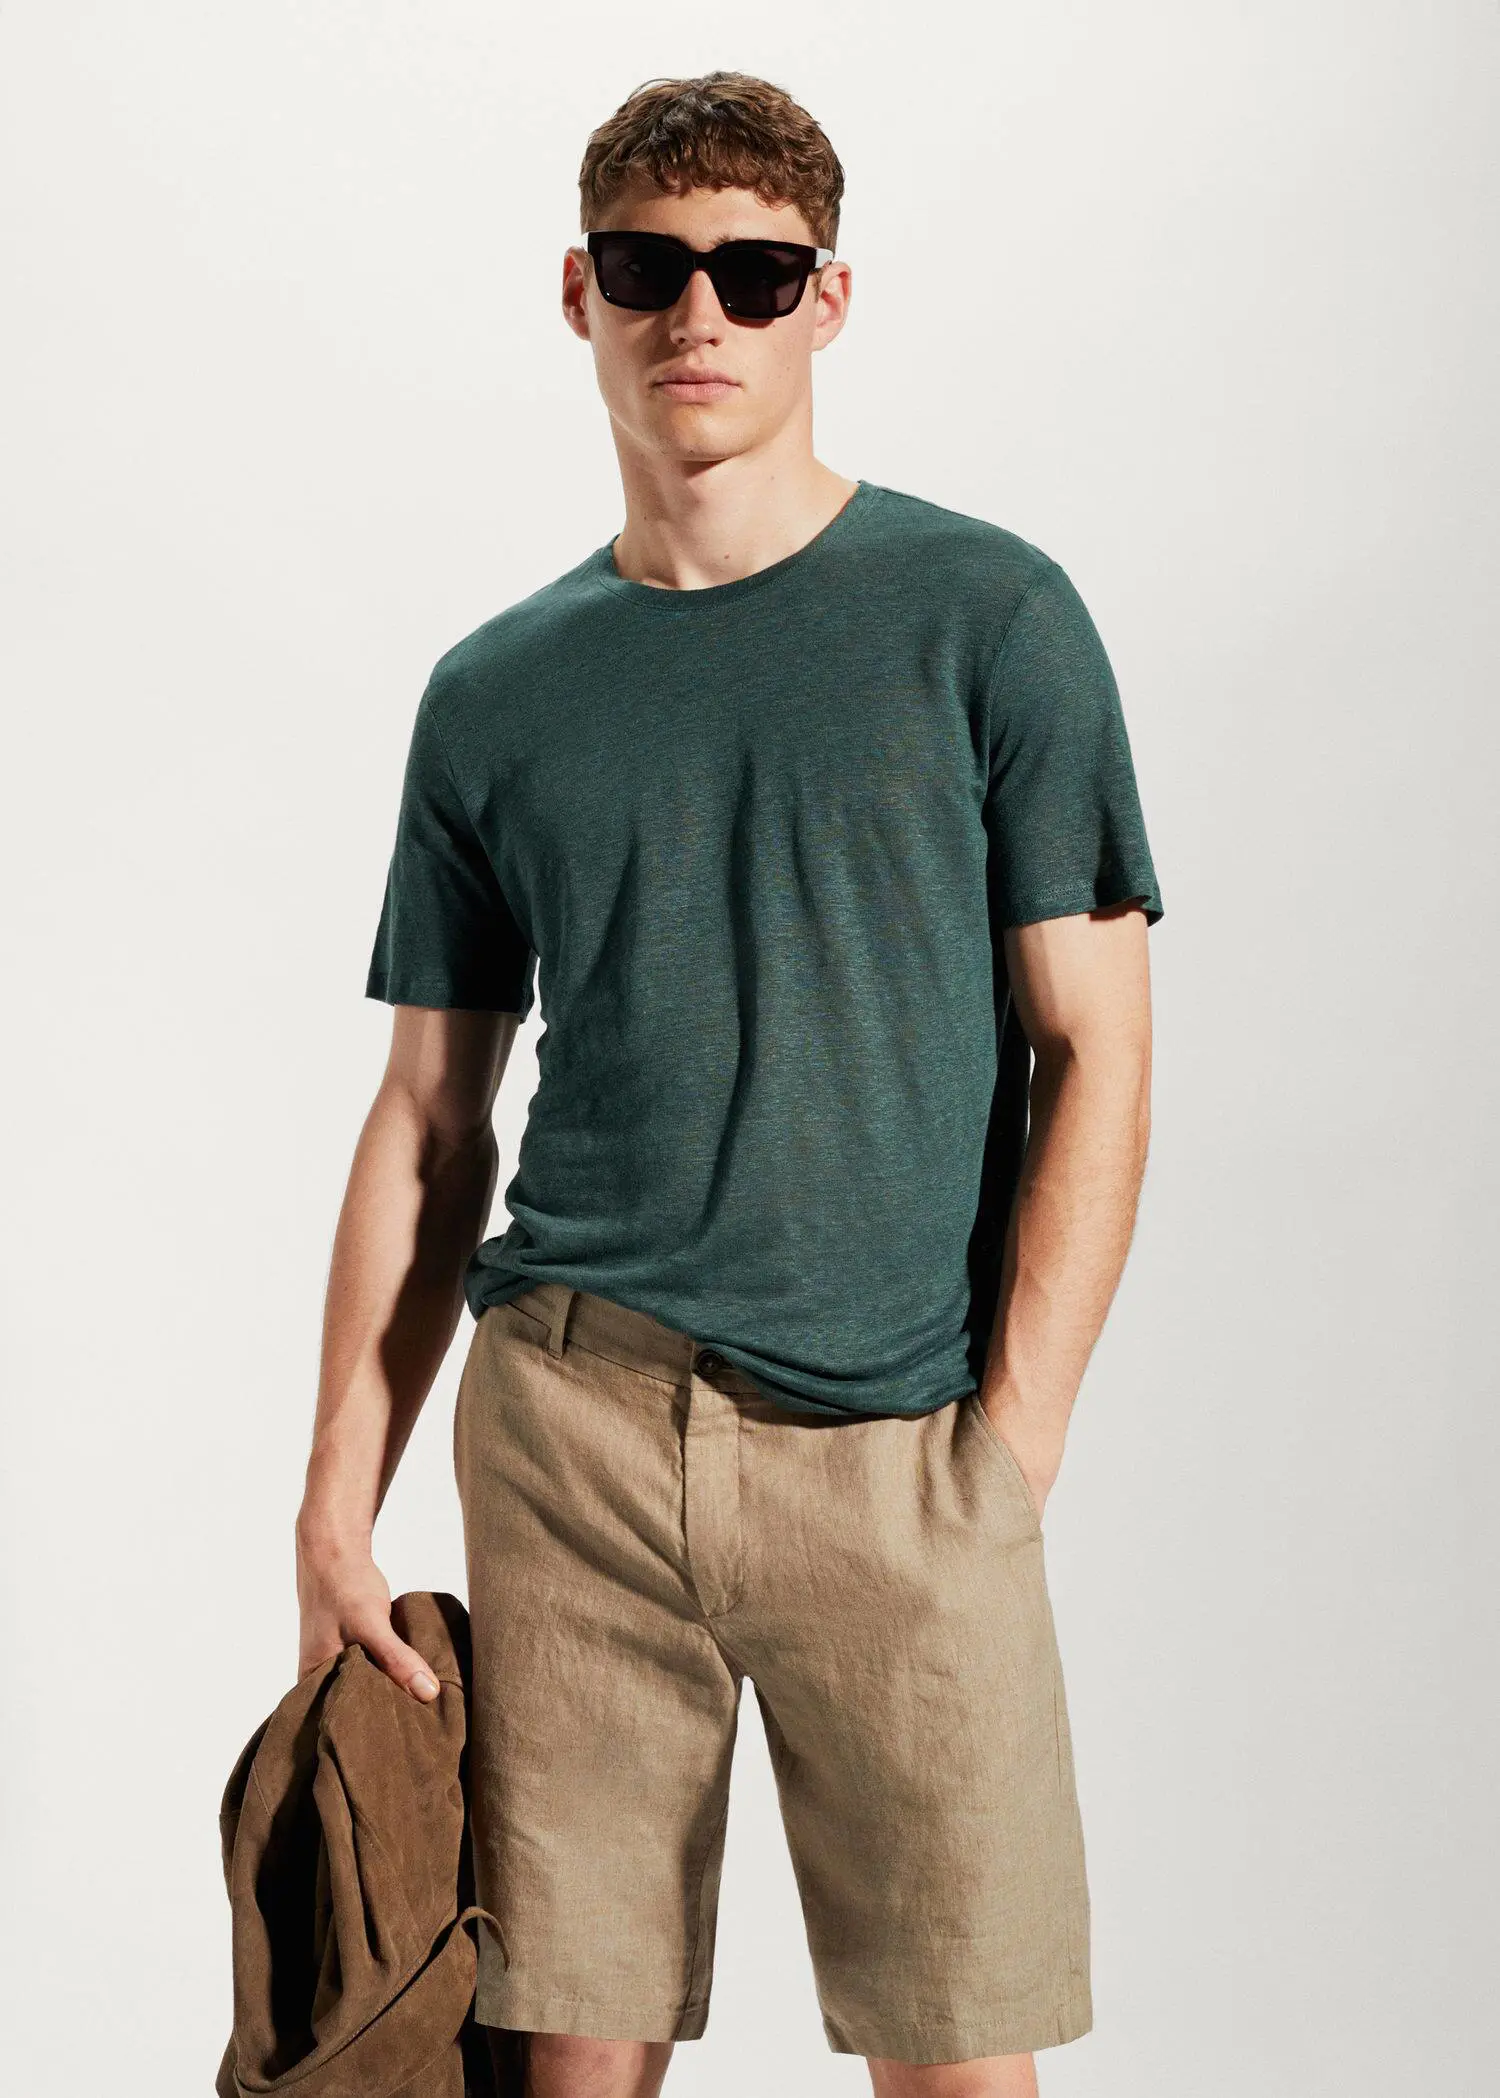 Mango 100% linen slim-fit t-shirt. a young man wearing sunglasses and a green tee shirt. 